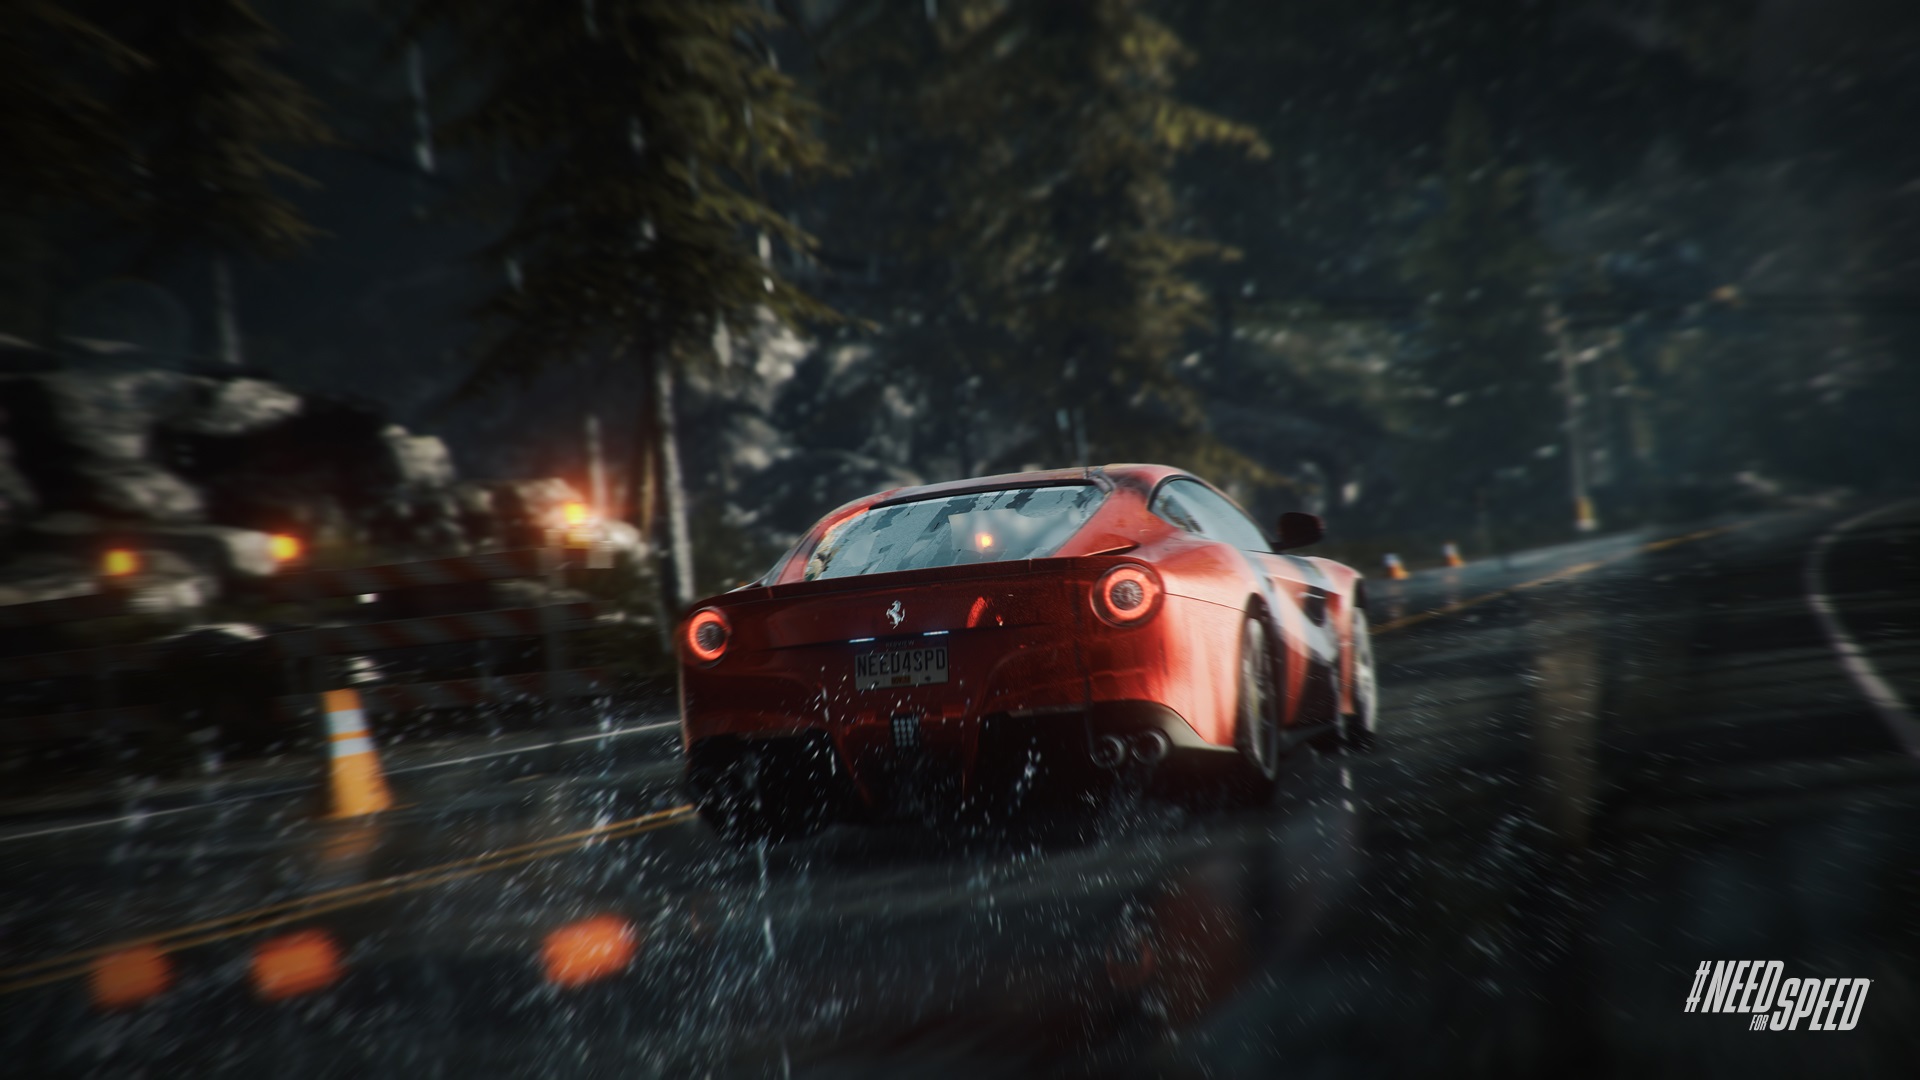 Need For Speed: Rivals Jazda vo Ferrari v tme za daa po lesnch cestch je adrenalnovm zitkom, hoci povrch vozovky nem vplyv na ovldanie.